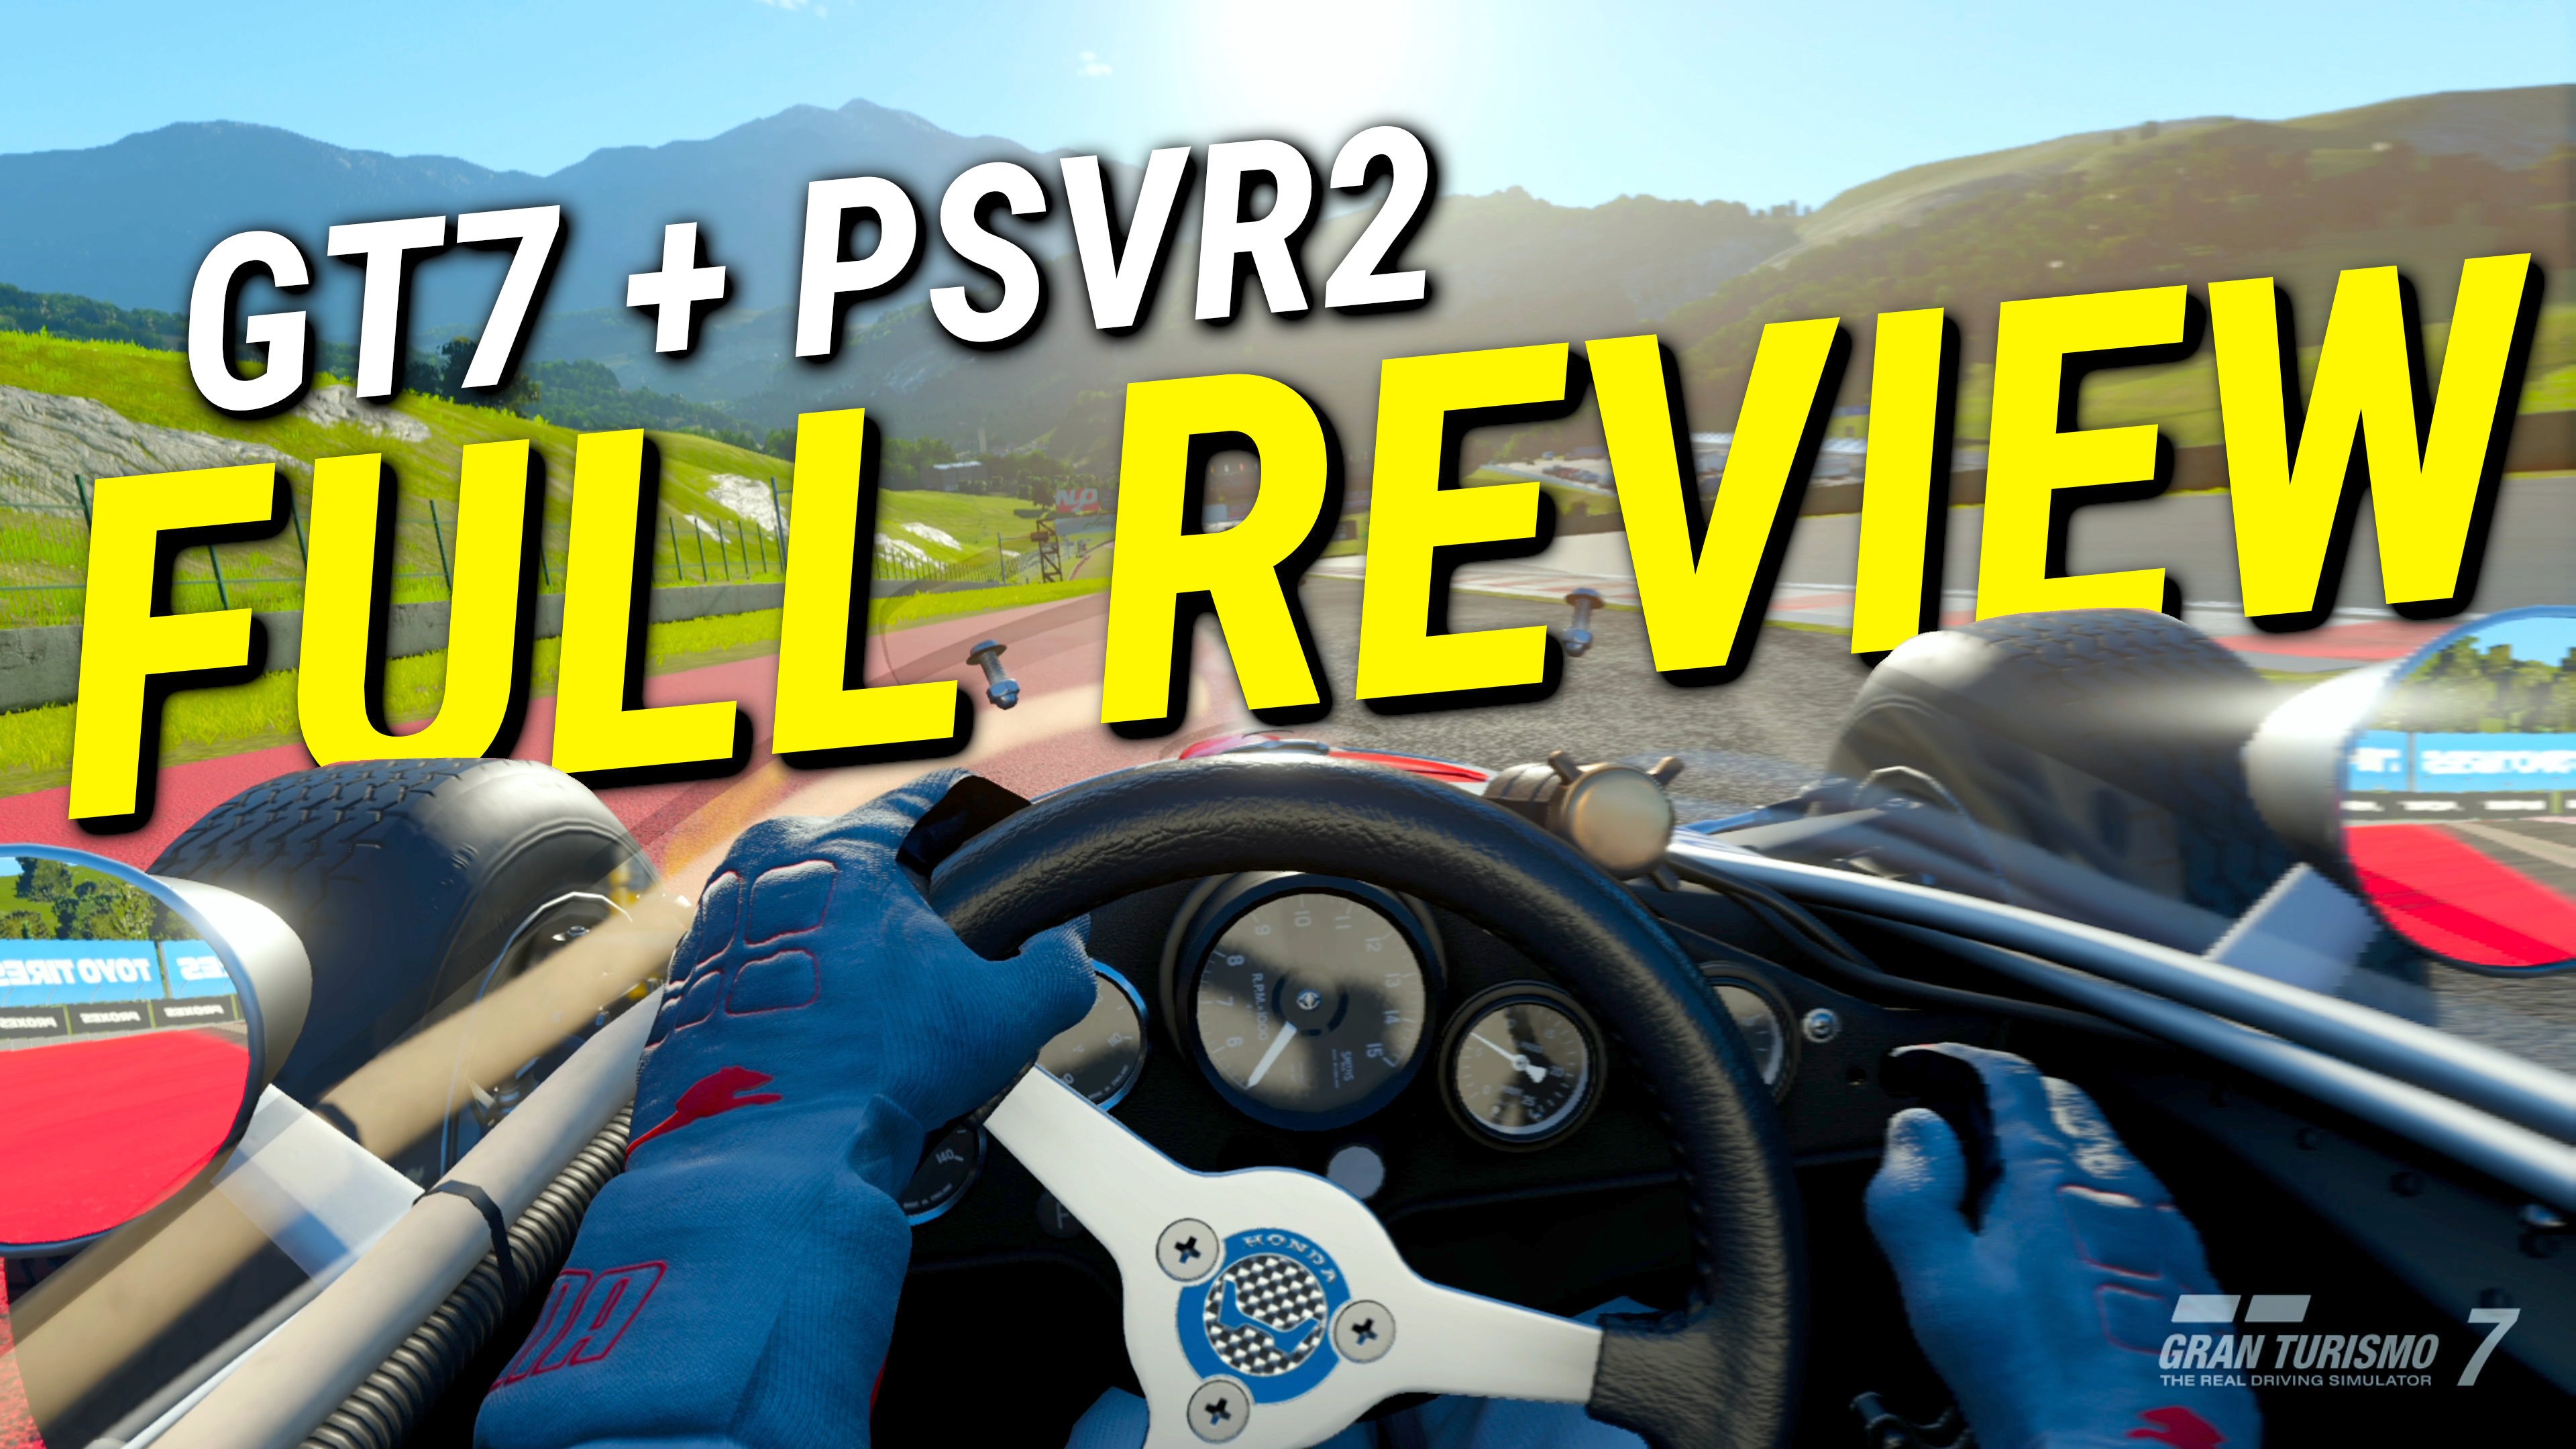 GRAN TURISMO SPORT VR - PS5 PSVR GAMEPLAY - GT SPORT RACE TRACK